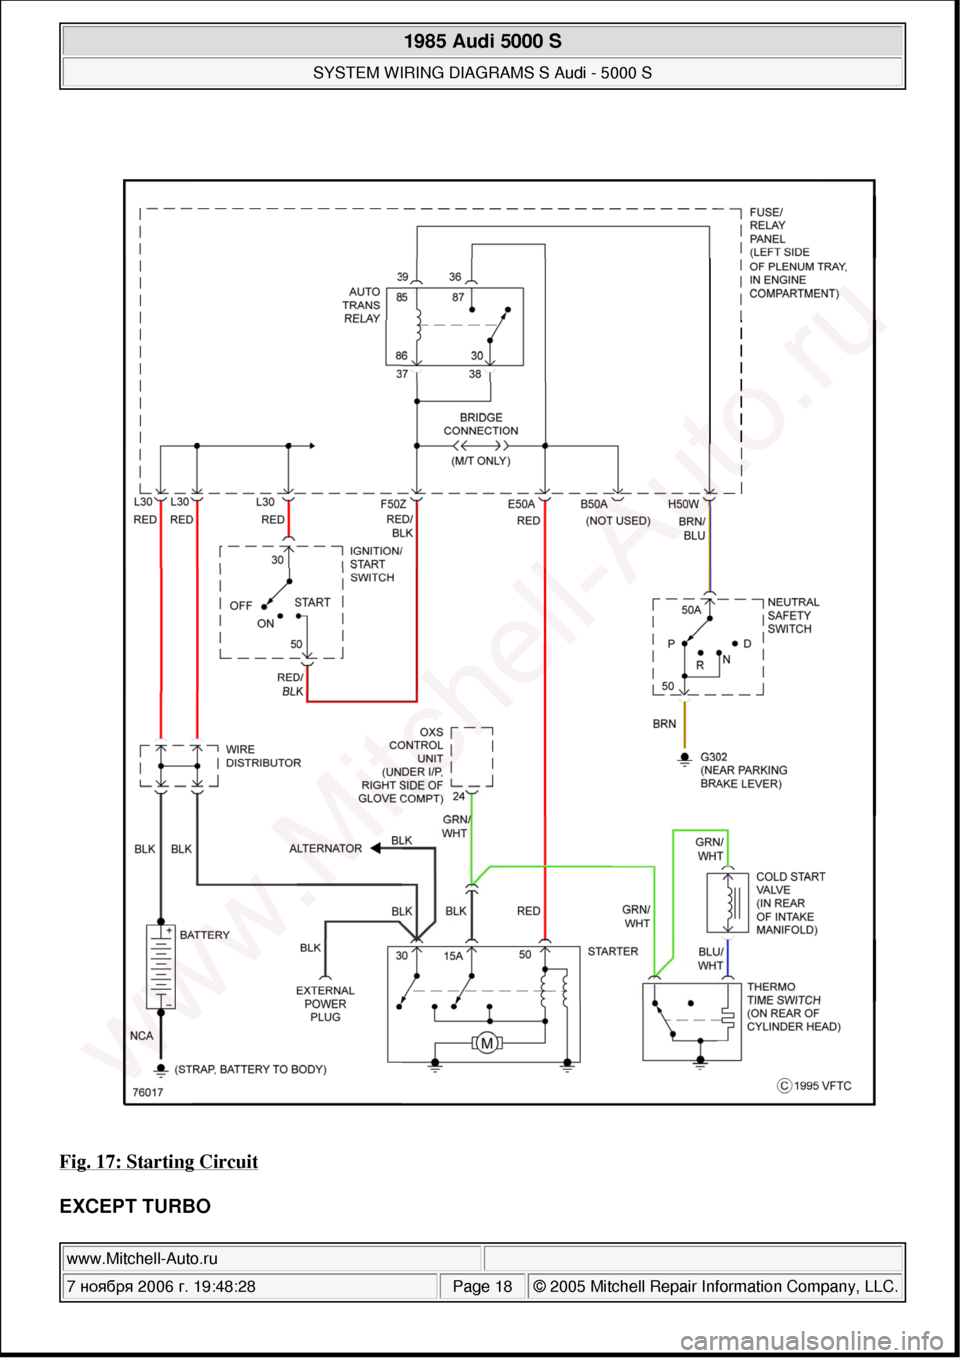 AUDI 5000S 1985 C2 System Wiring Diagram 
Fig. 17: Starting Circuit 
EXCEPT TURBO 
 
1985 Audi 5000 S 
SYSTEM WIRING DIAGRAMS S Audi - 5000 S  
www.Mitchell-Auto.ru  
7  ноября  2006 г. 19:48:28Page 18 © 2005 Mitchell Repair Informat